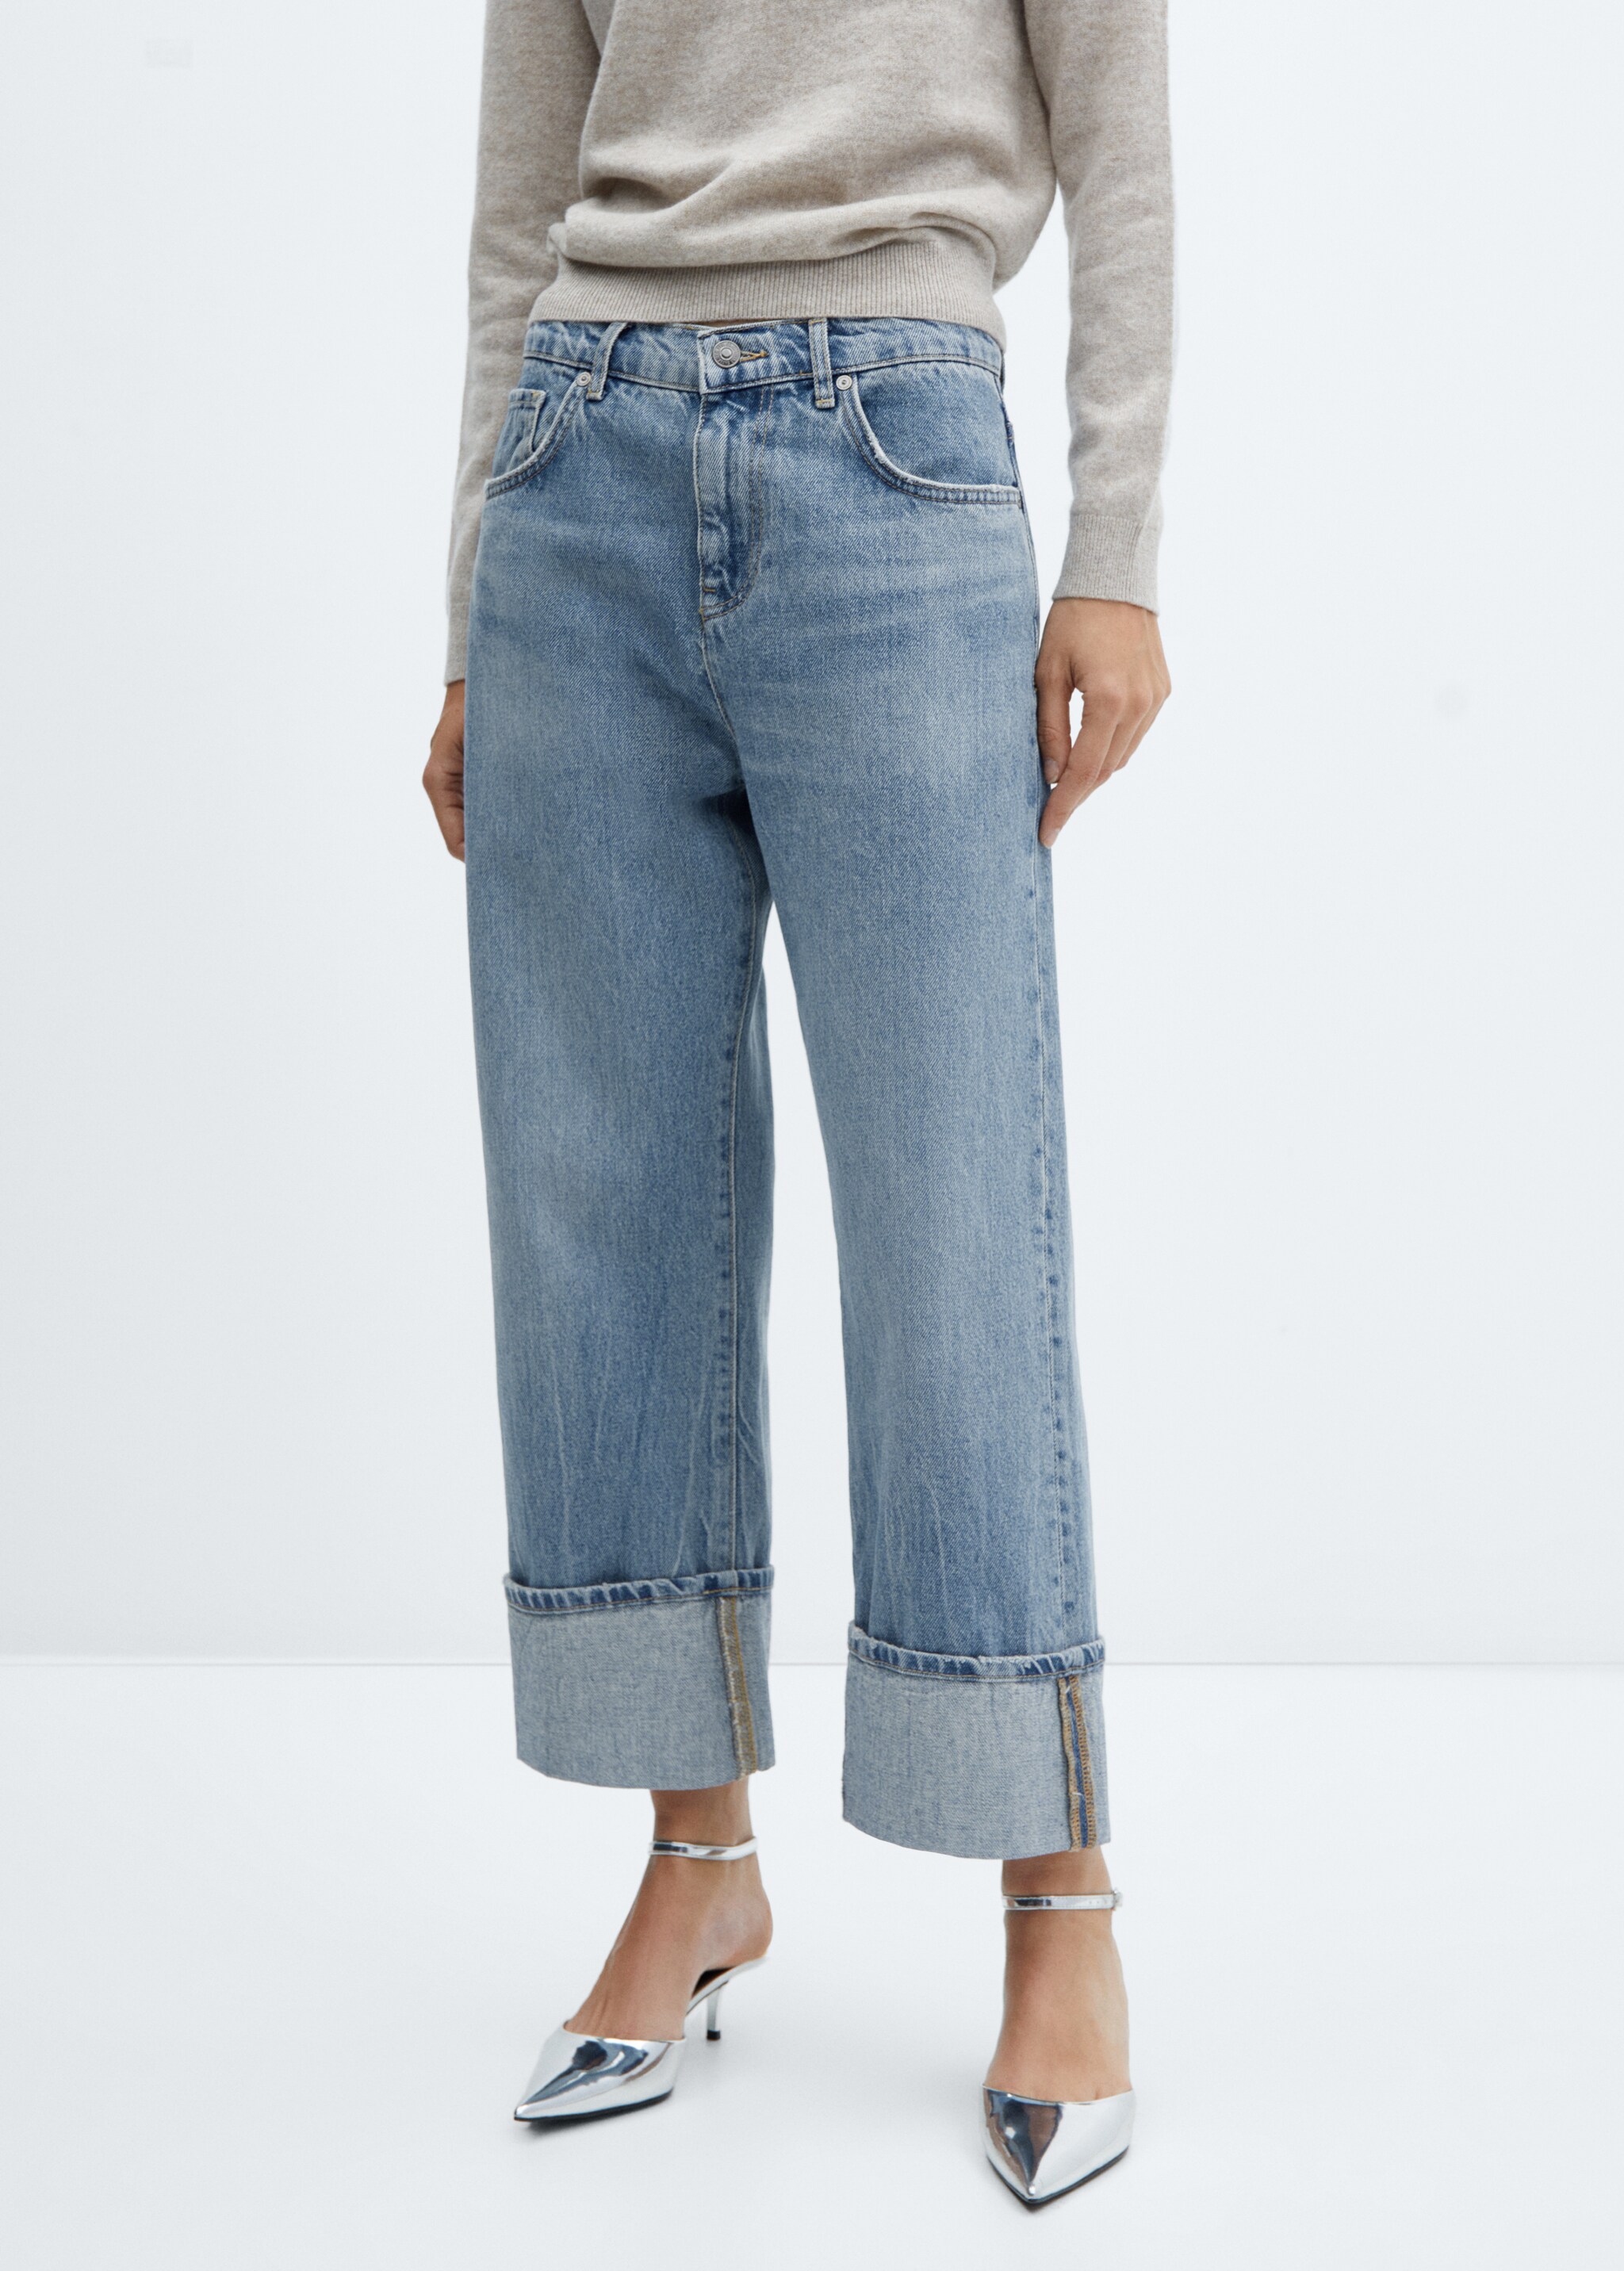 Wideleg jeans with turned-up hem - Medium plane